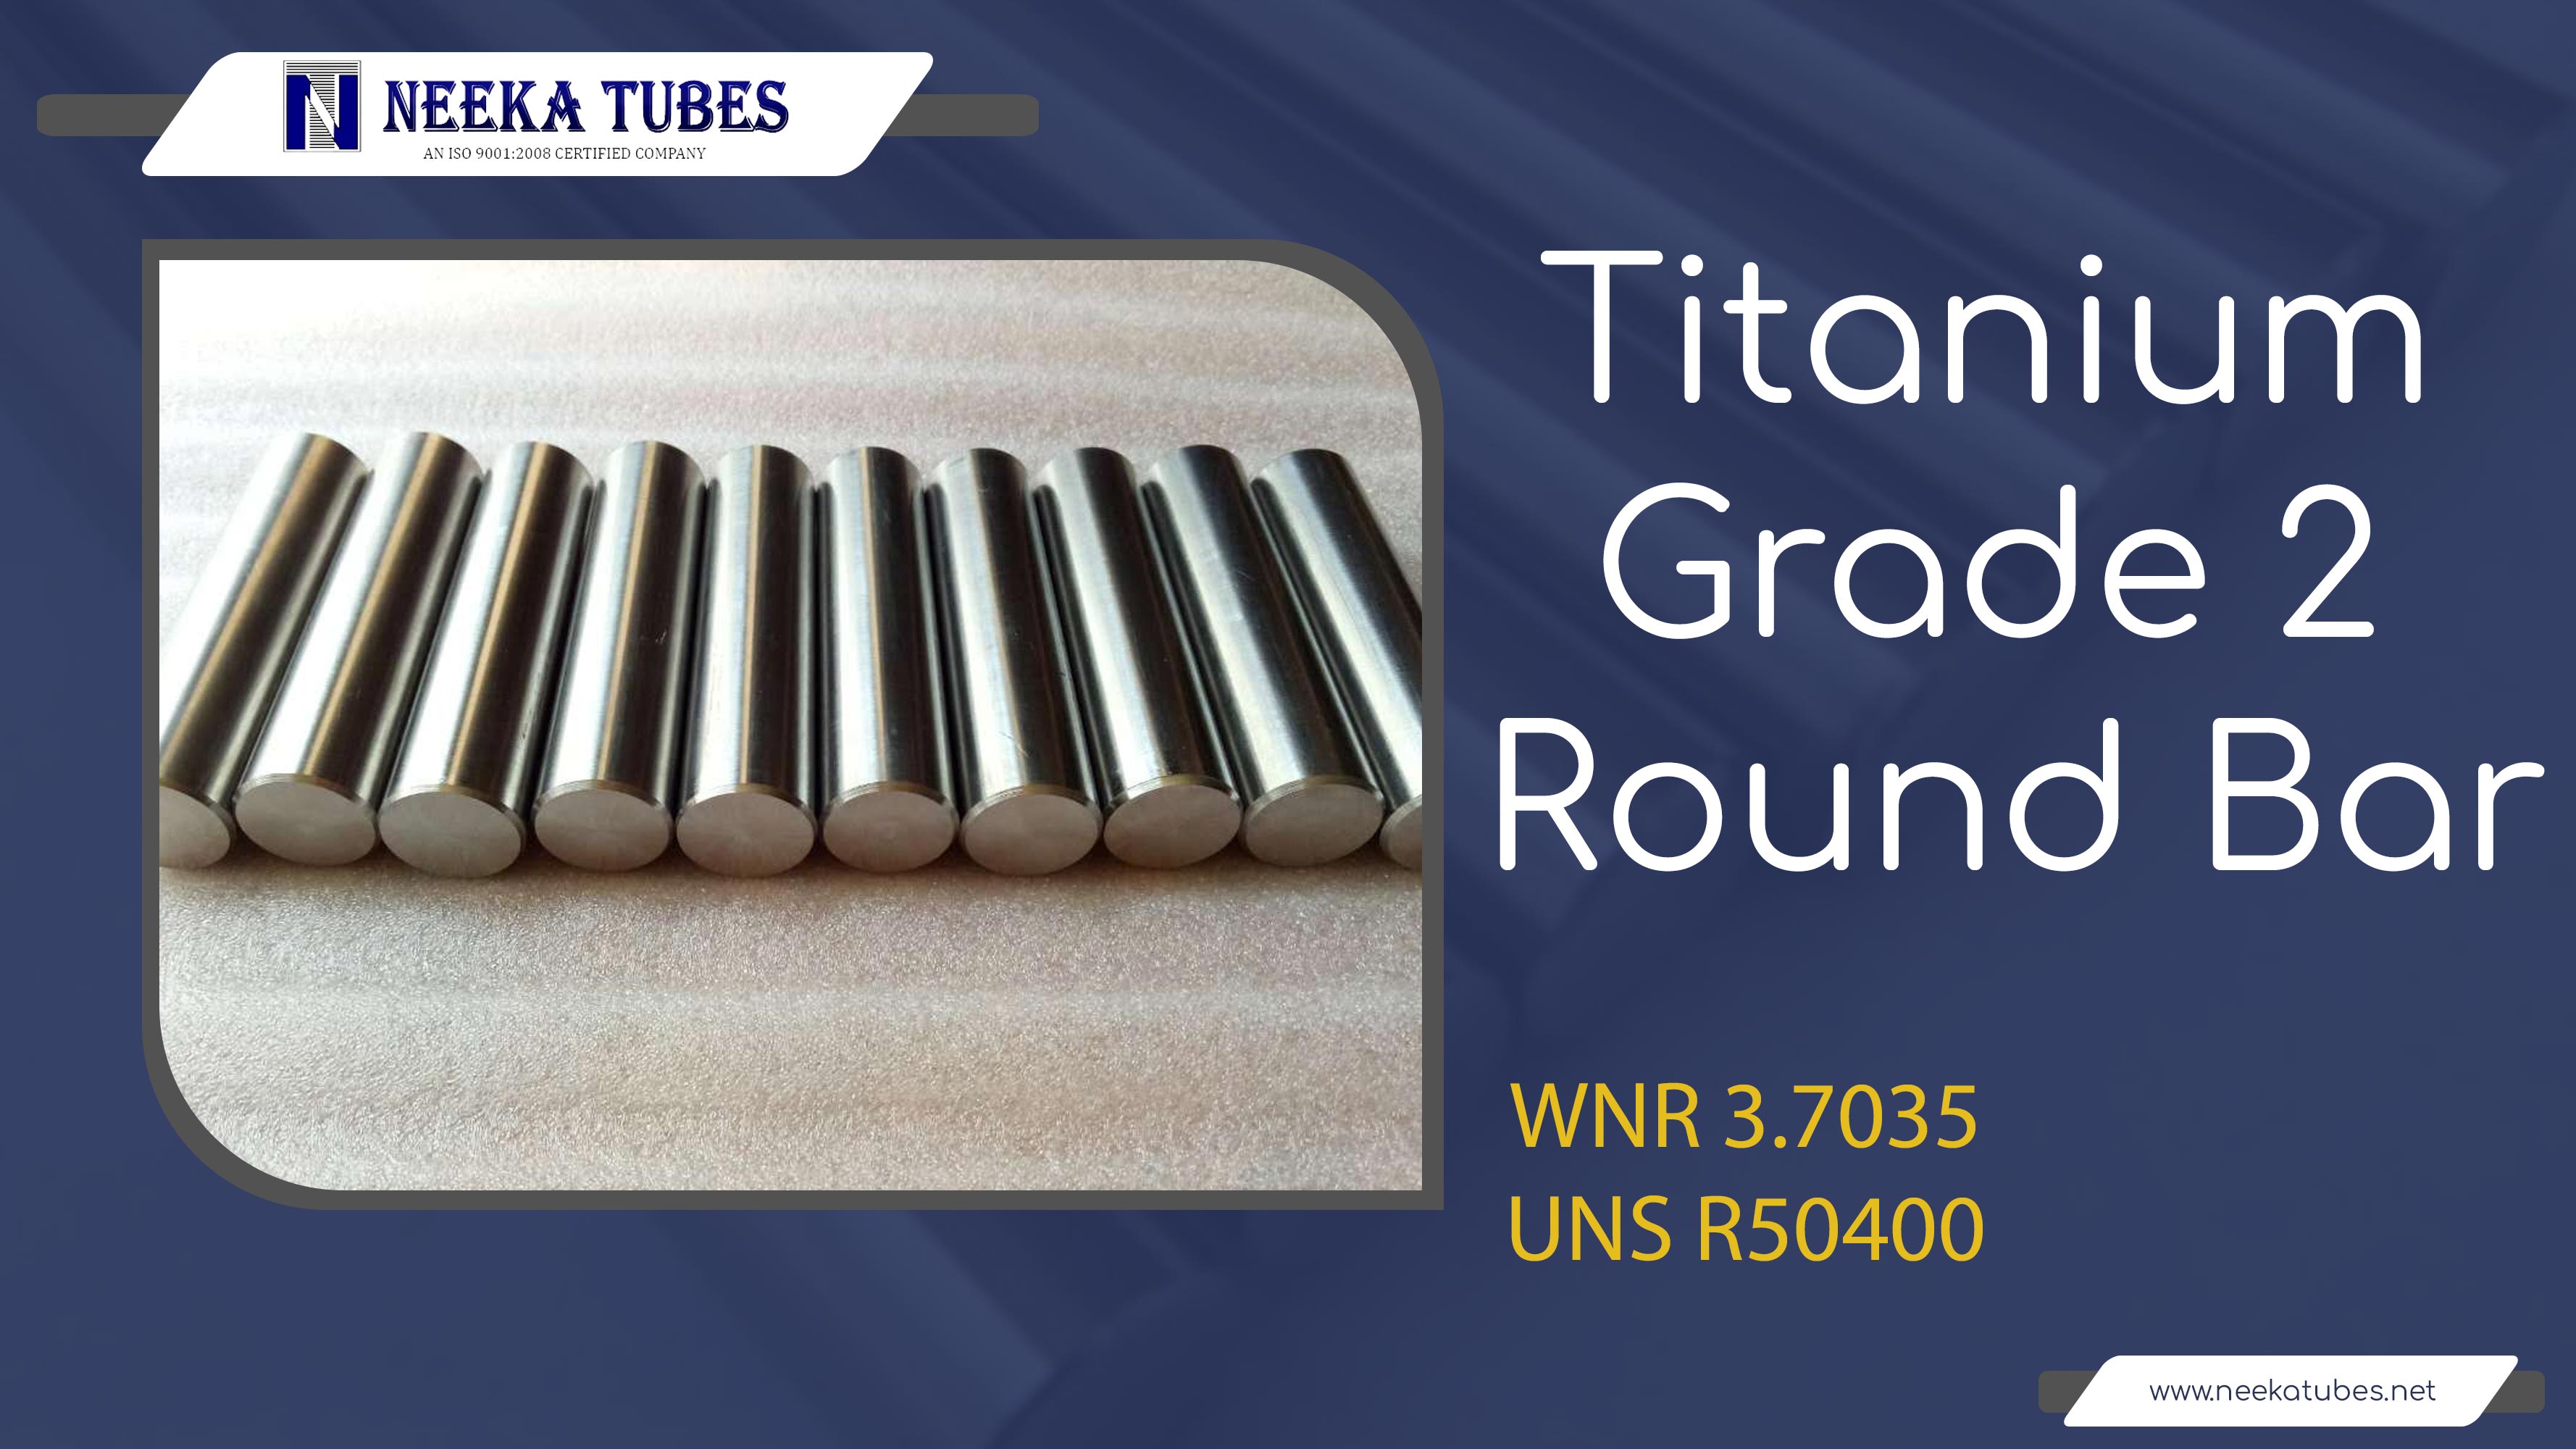 Tittanium grade 2 round bar